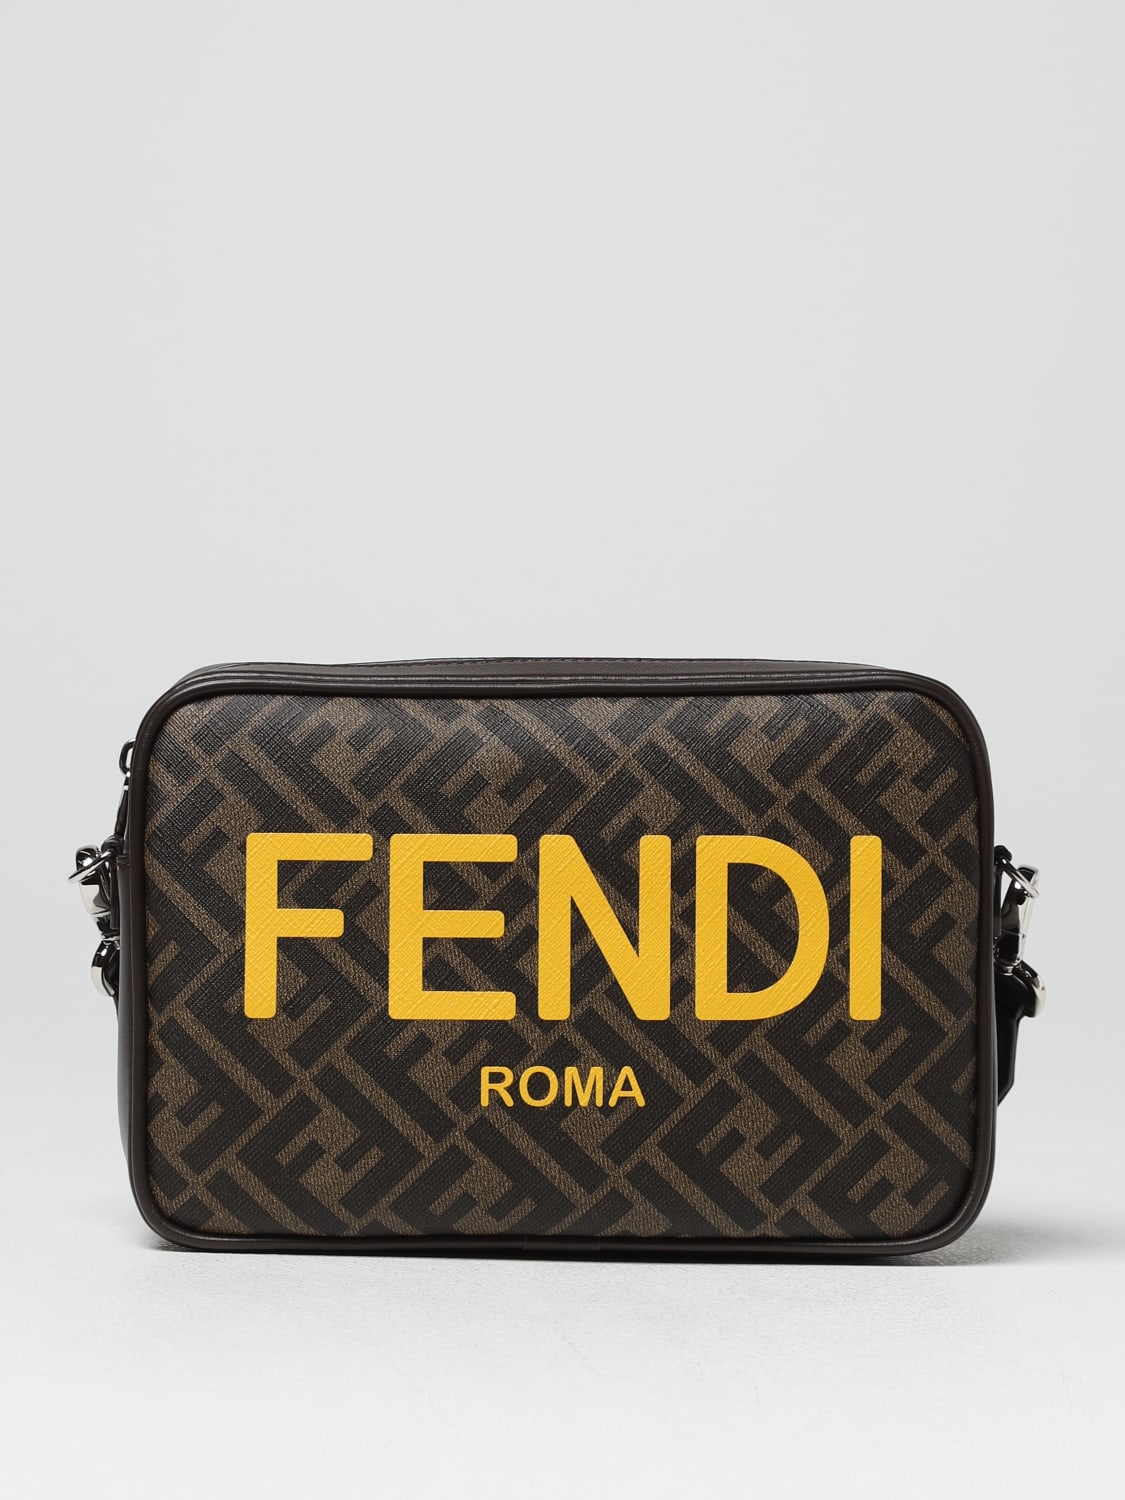 FENDI Roma Handbags in Lagos Island (Eko) - Bags, Ify collection